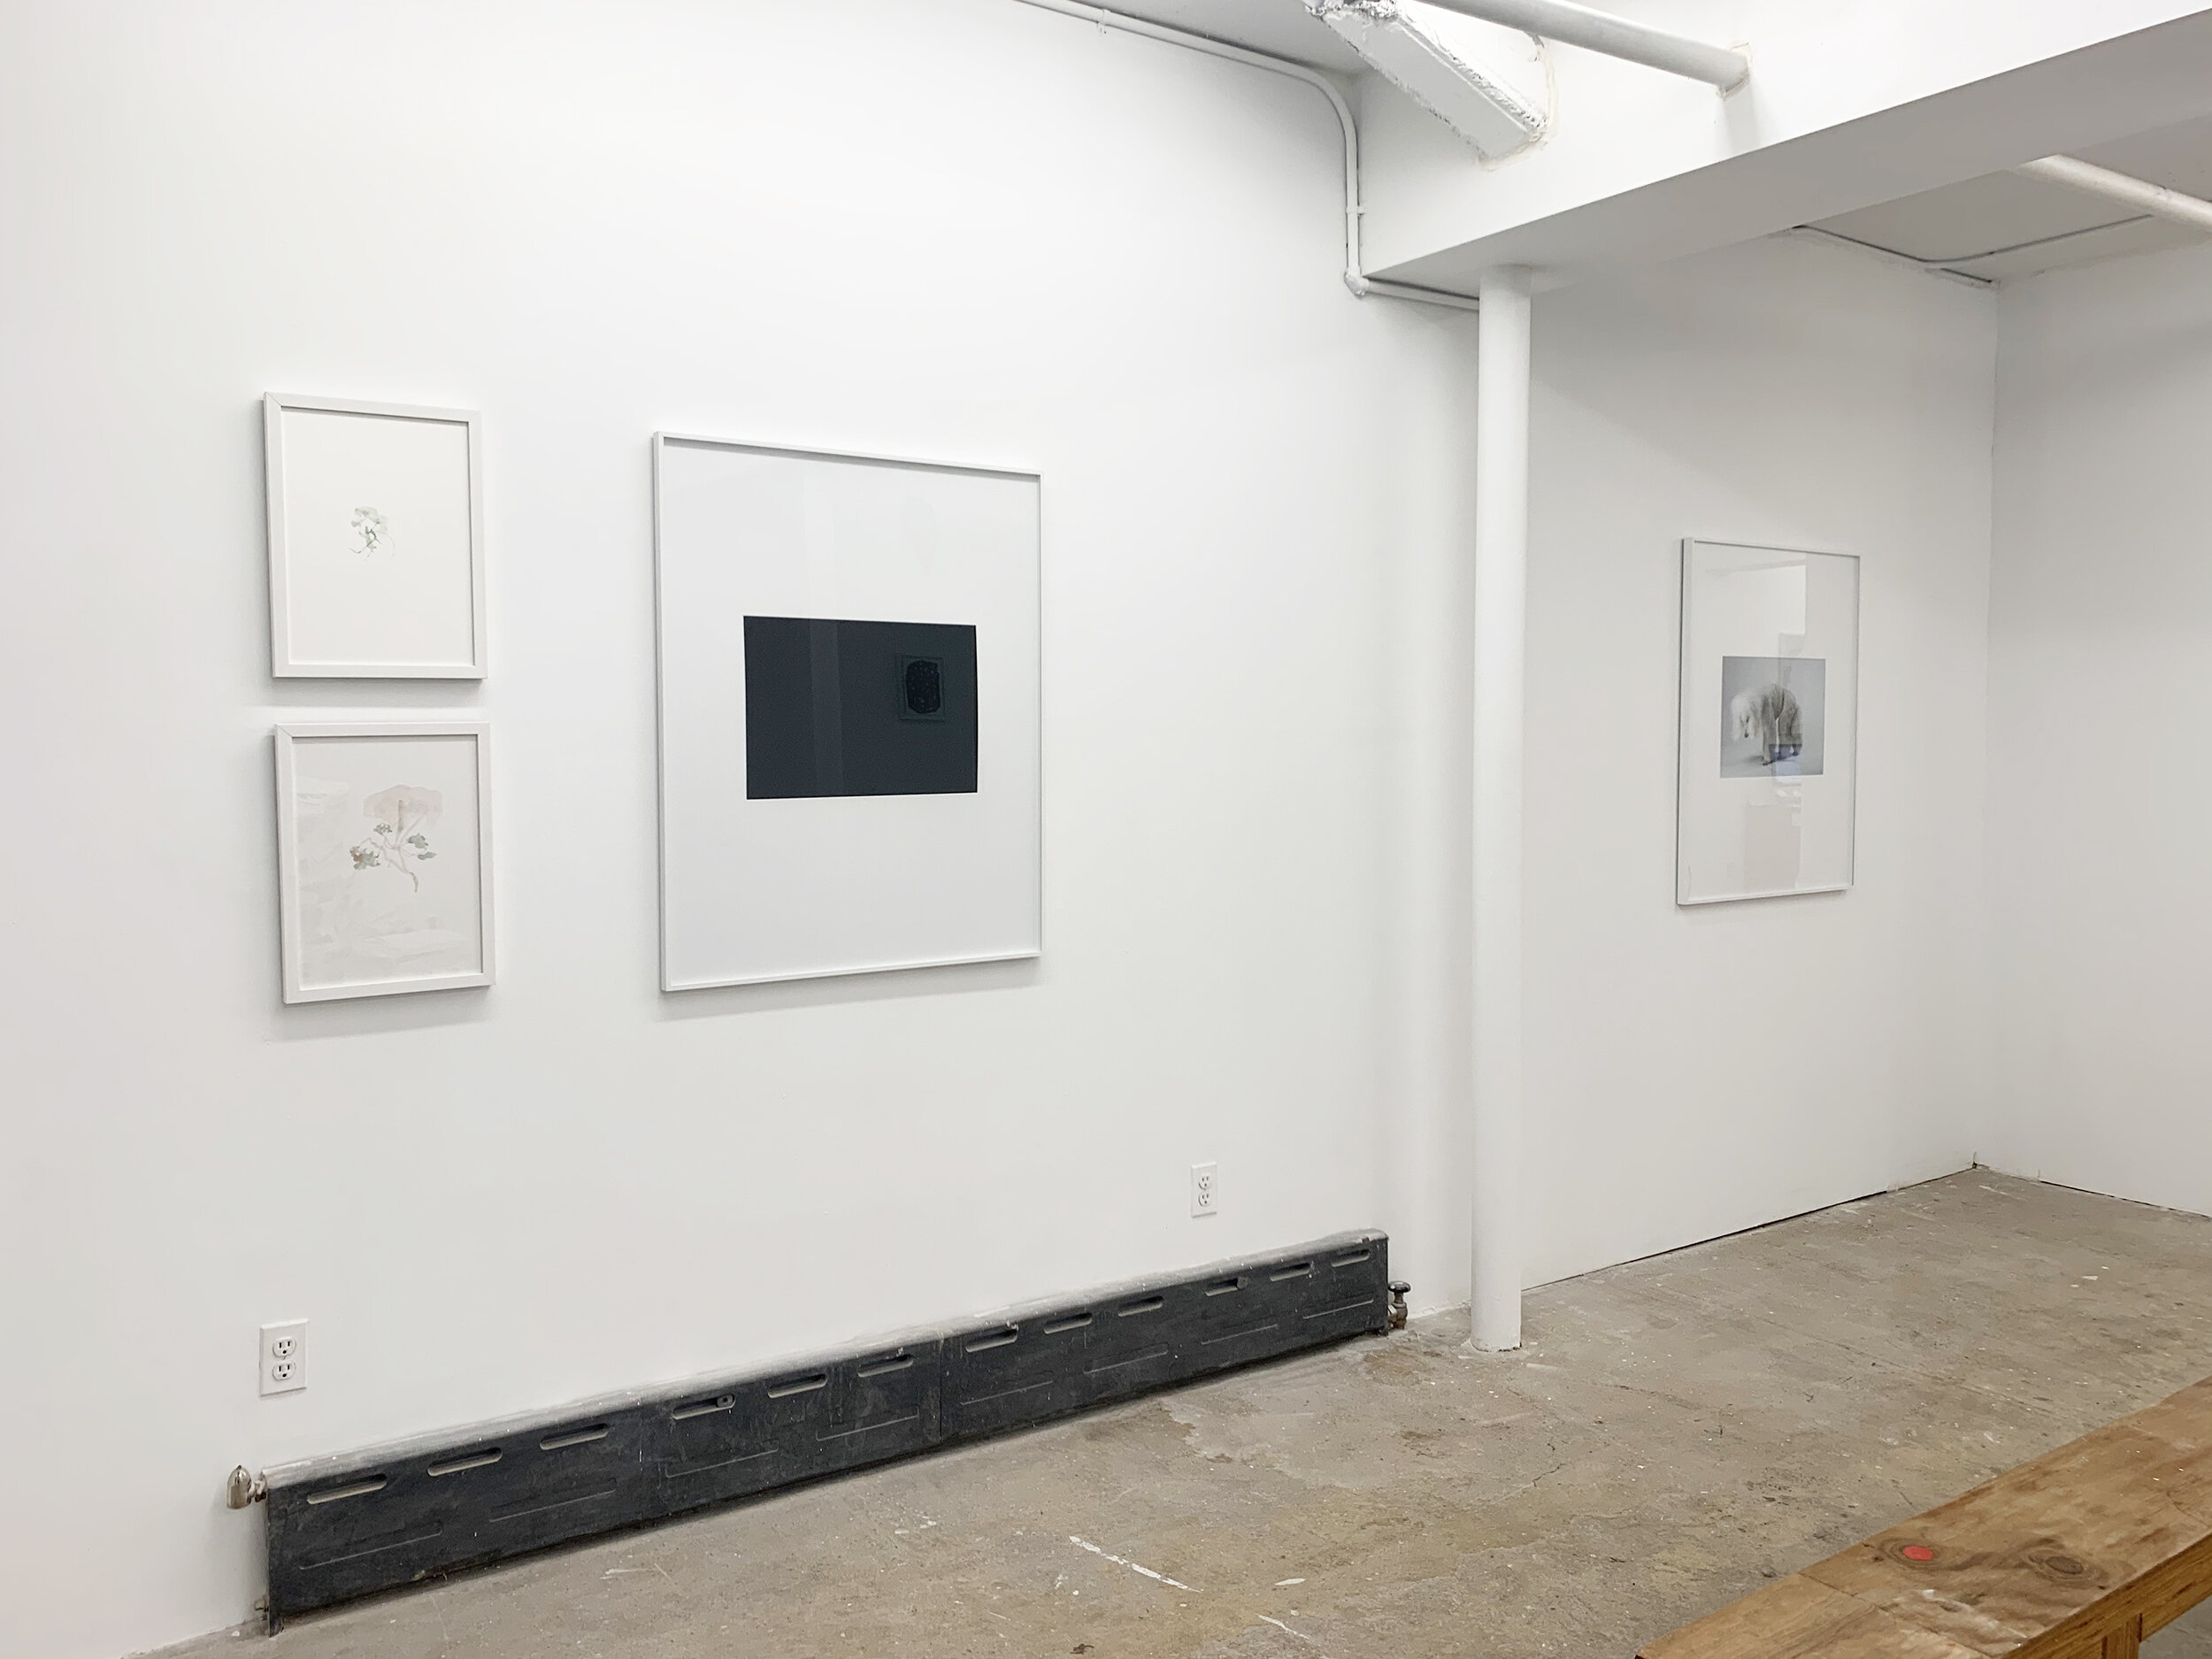 Geissler/Sann photographs, Martin Schwenk works on paper, installation images, None Sing exhibition at Cindy Rucker Gallery